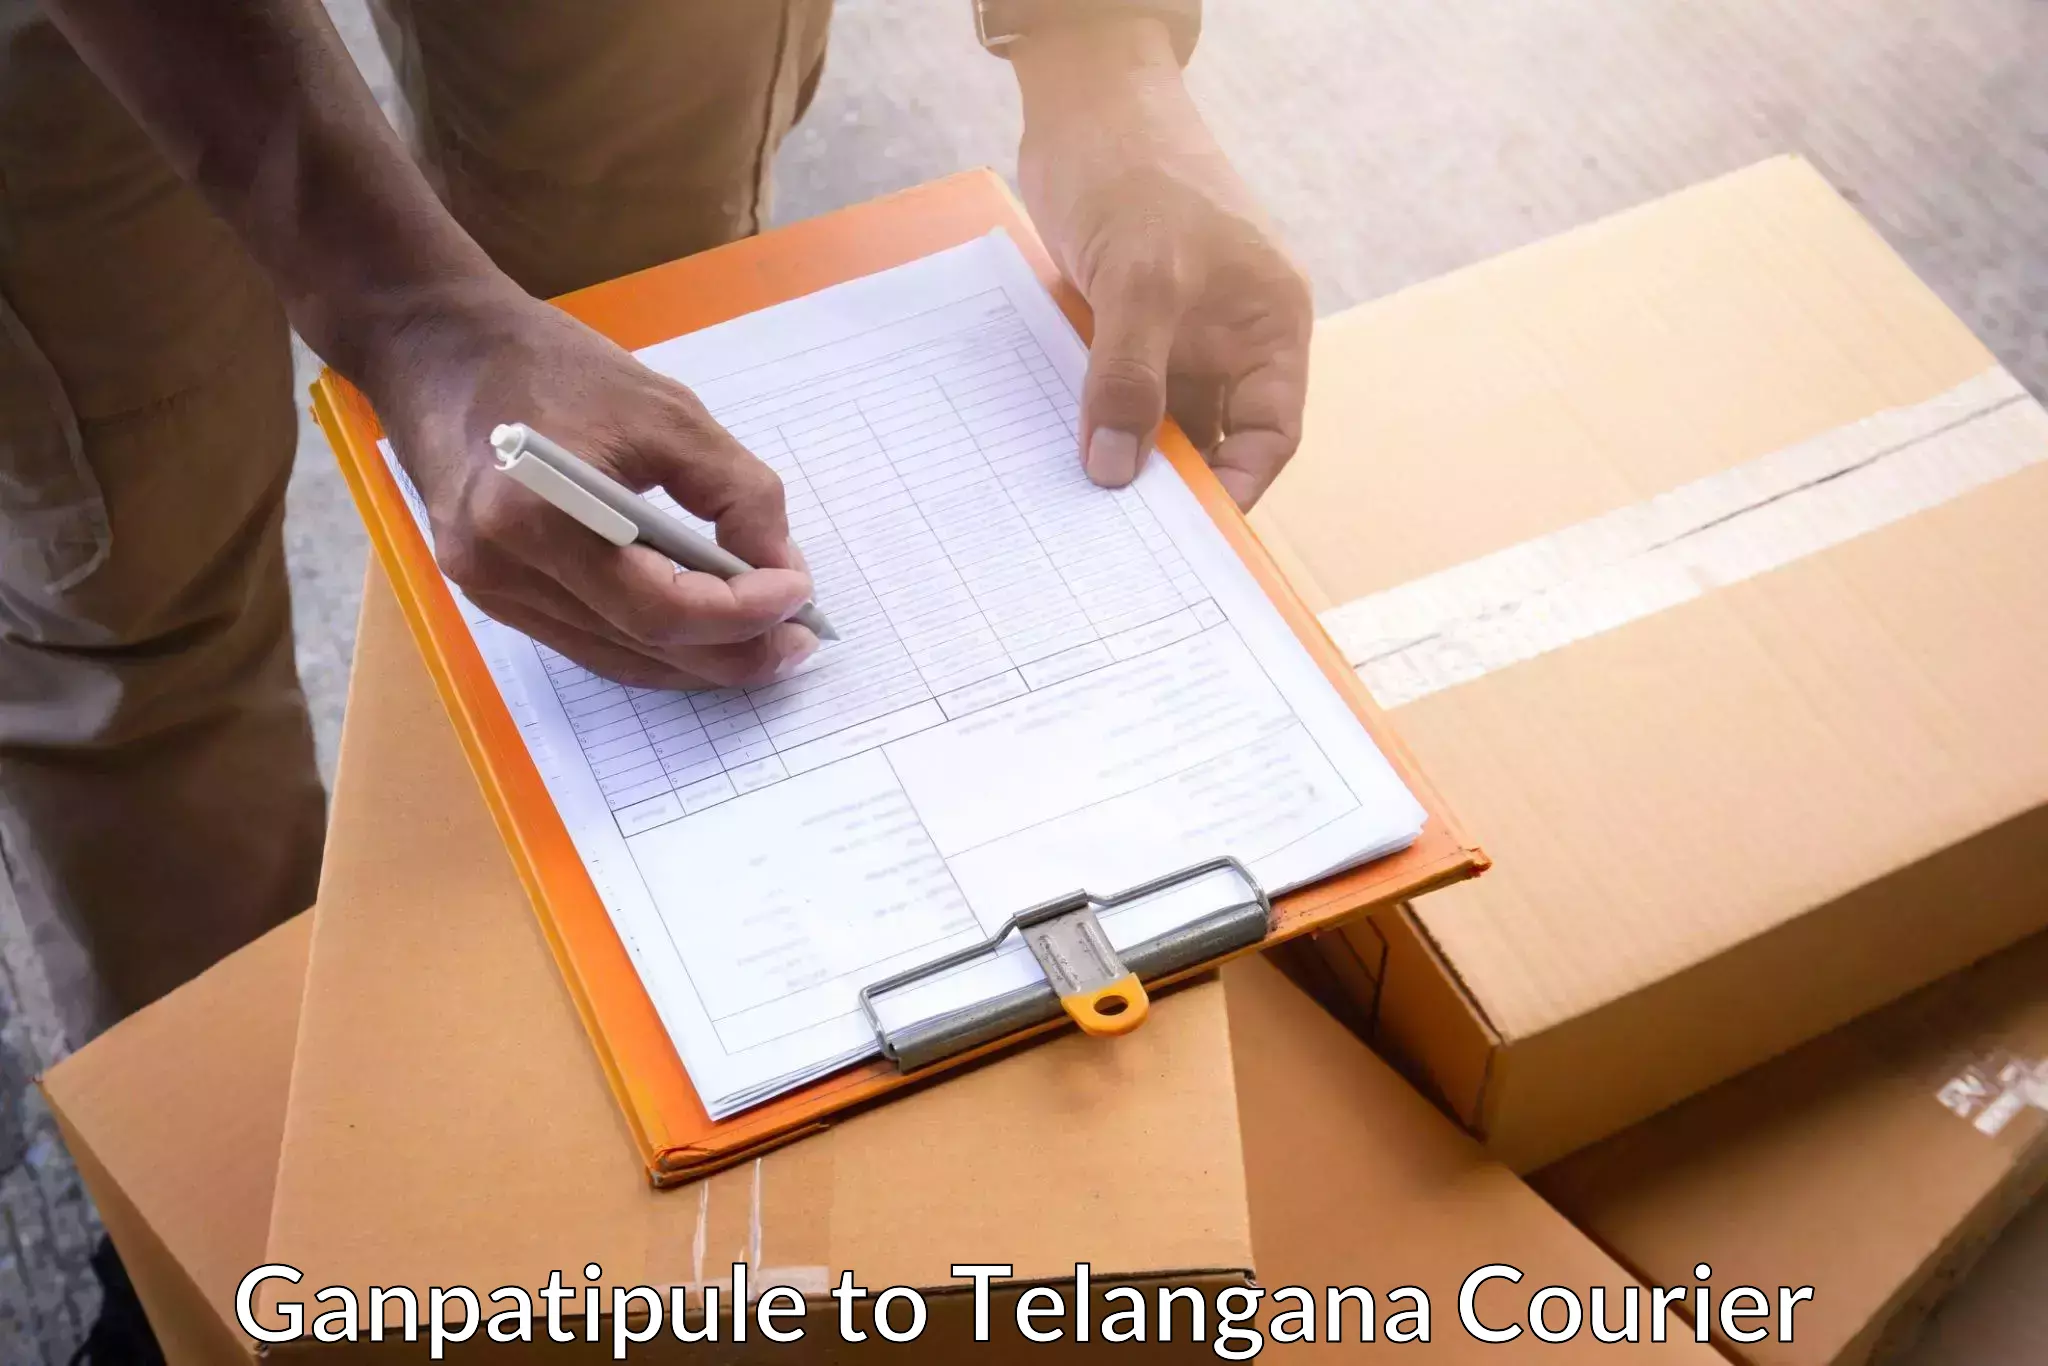 Courier dispatch services Ganpatipule to Manneguda